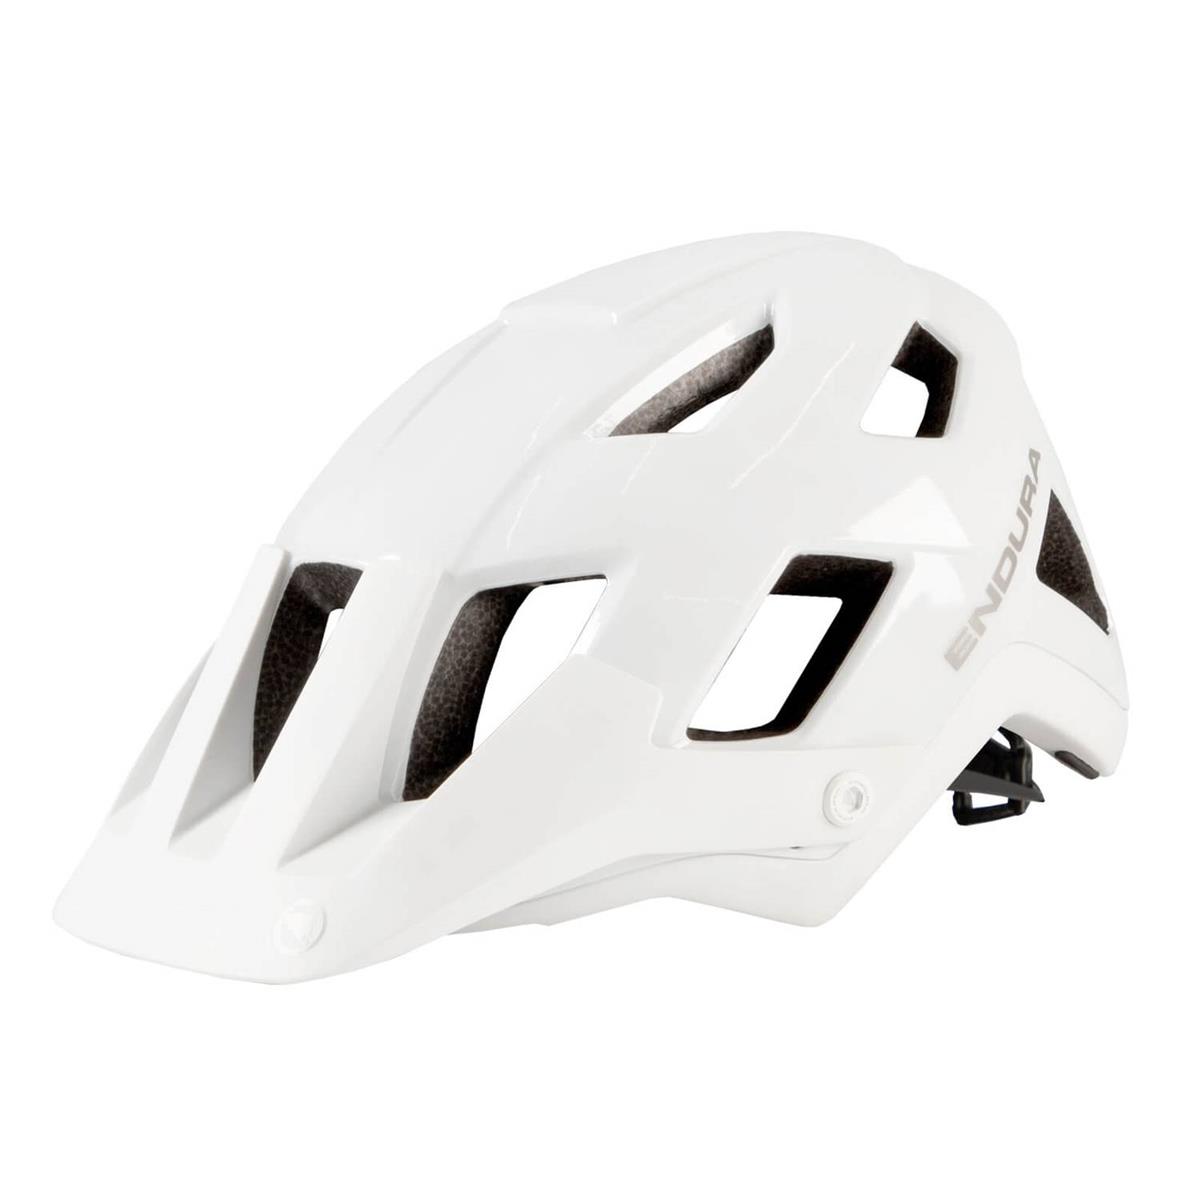 Hummvee Plus MTB Enduro Helmet White Size L/XL (58-63cm)